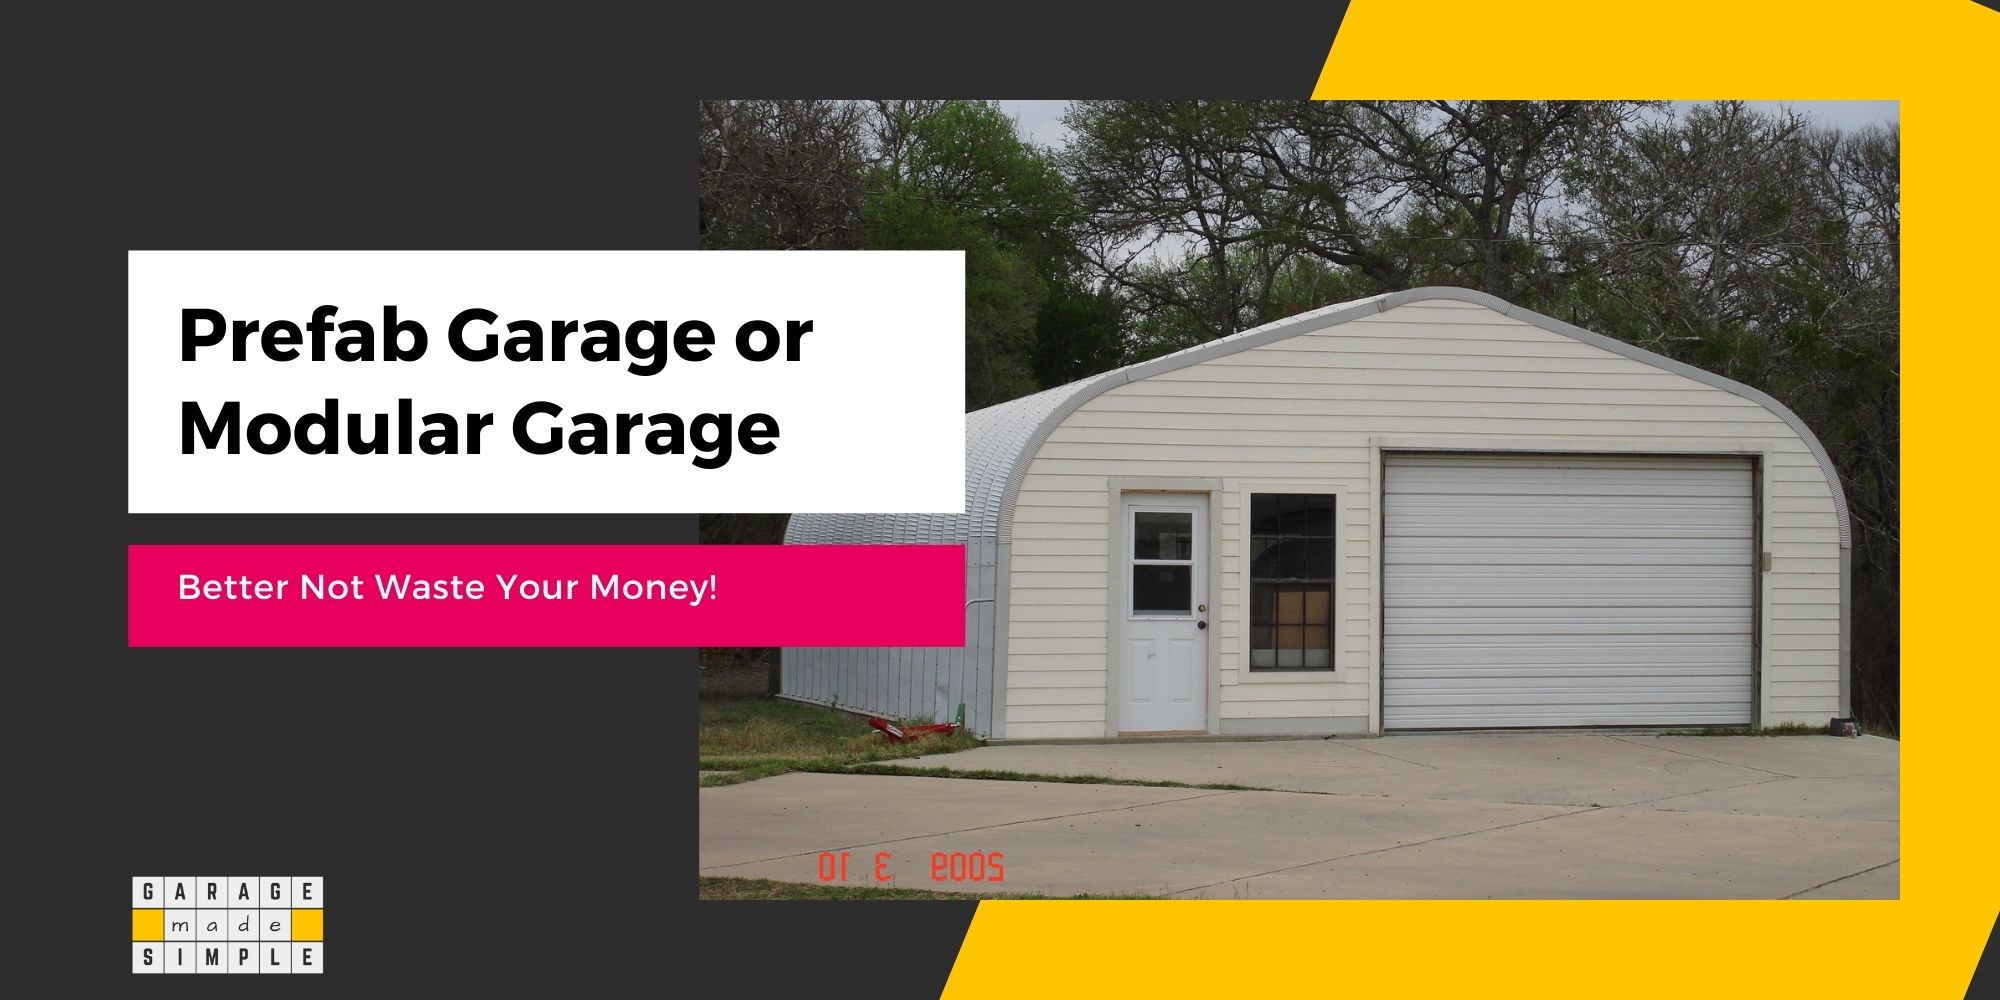 Are Prefab Garages Any Good? (Spend Money on Better Alternatives!)